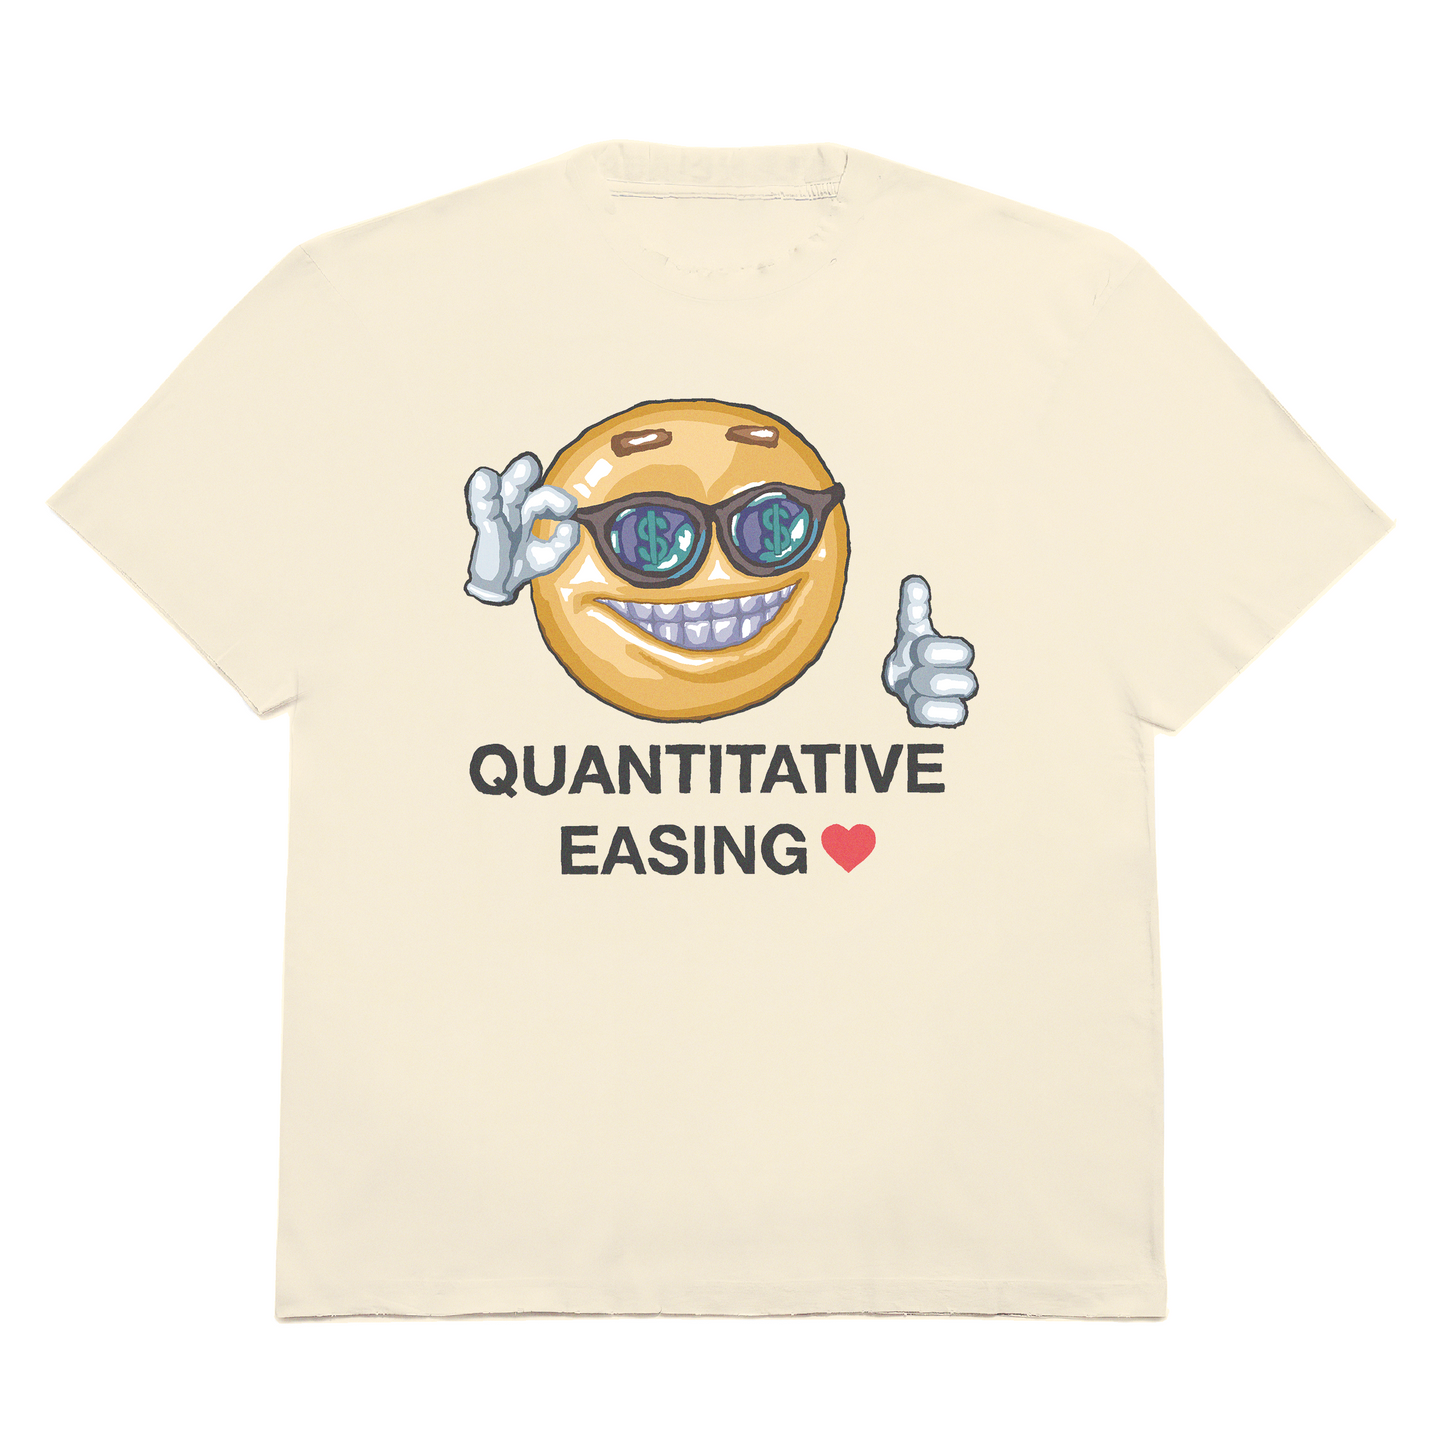 Fashion Politik "Quantitative Easing" Tee - Creme, White - 100% Cotton Premium Comfort Colors